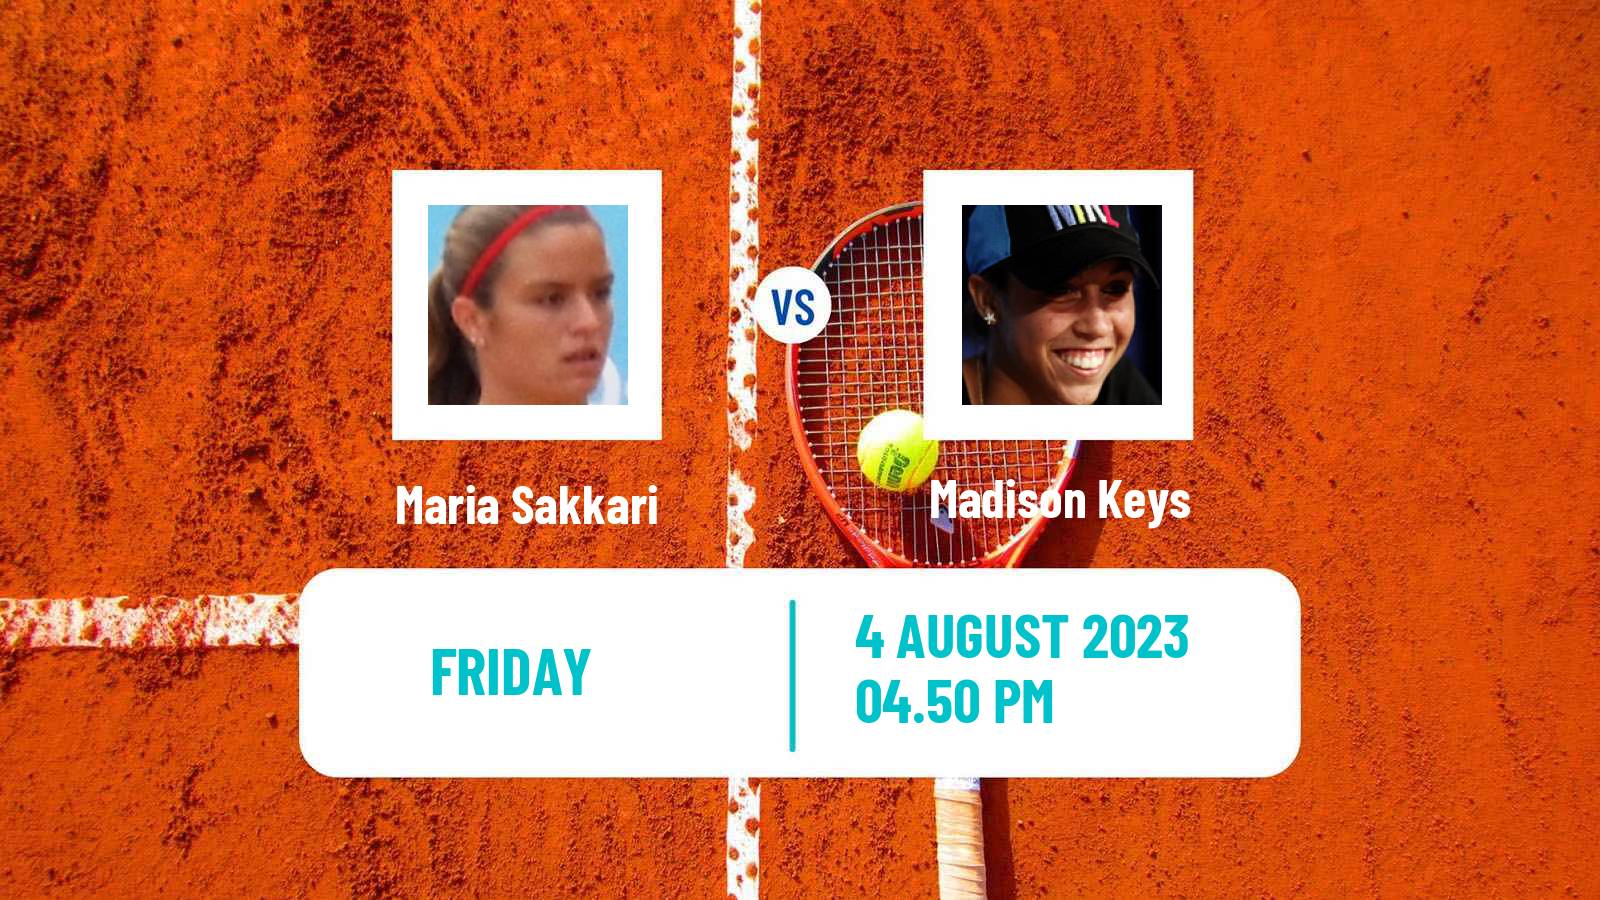 Tennis WTA Washington Maria Sakkari - Madison Keys